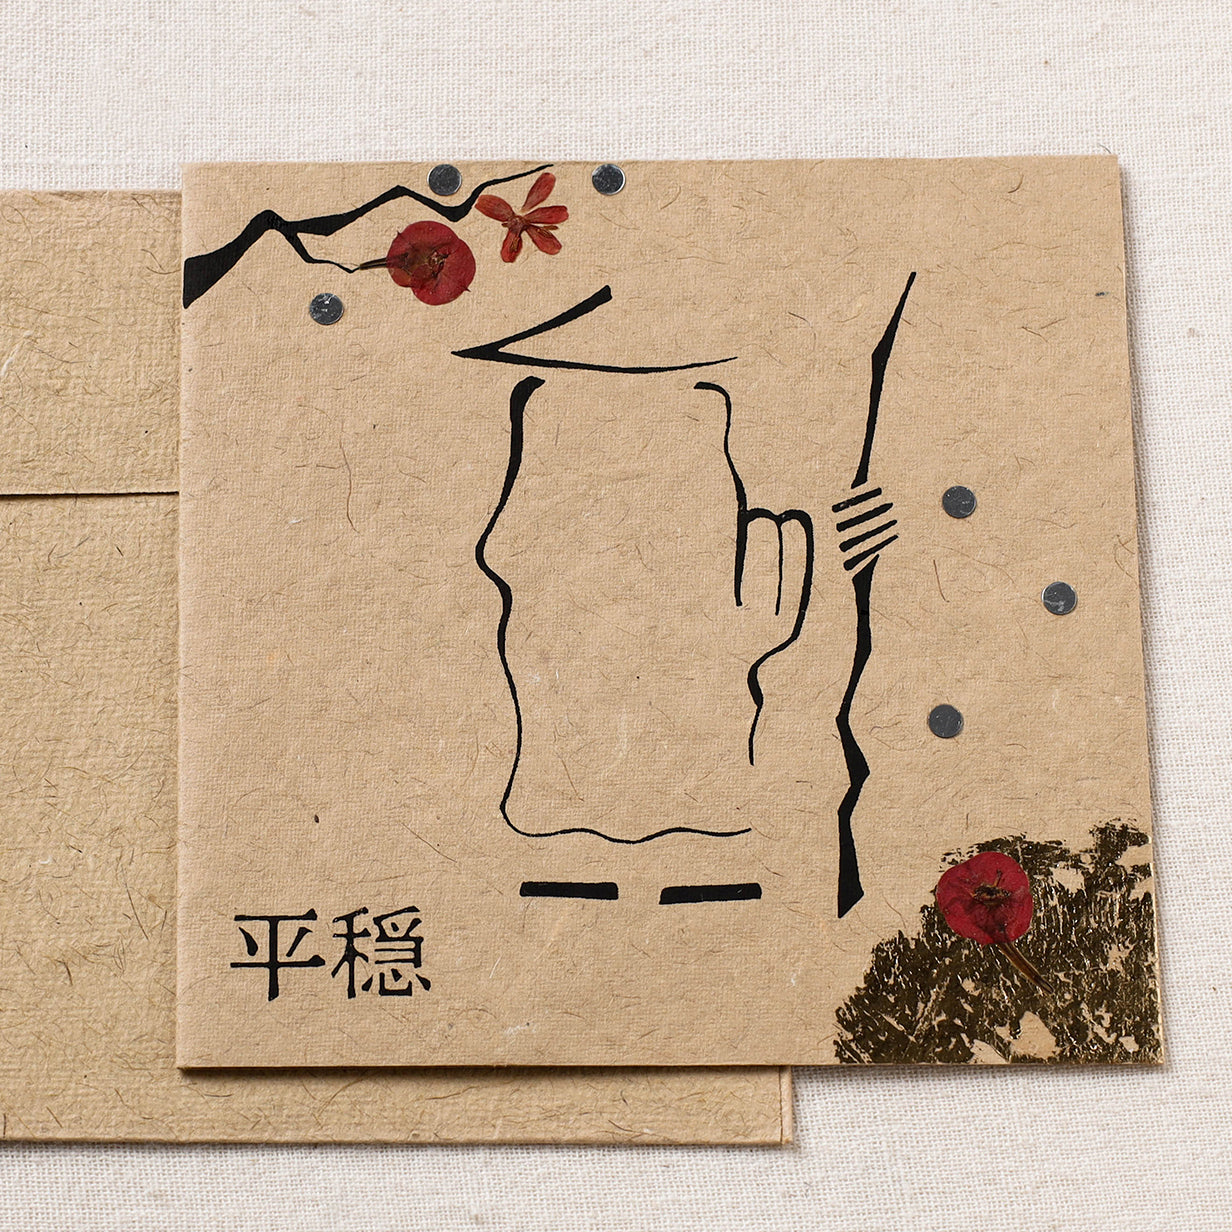 Intricate Flower Art Handmade Paper Greeting Card - Single Piece